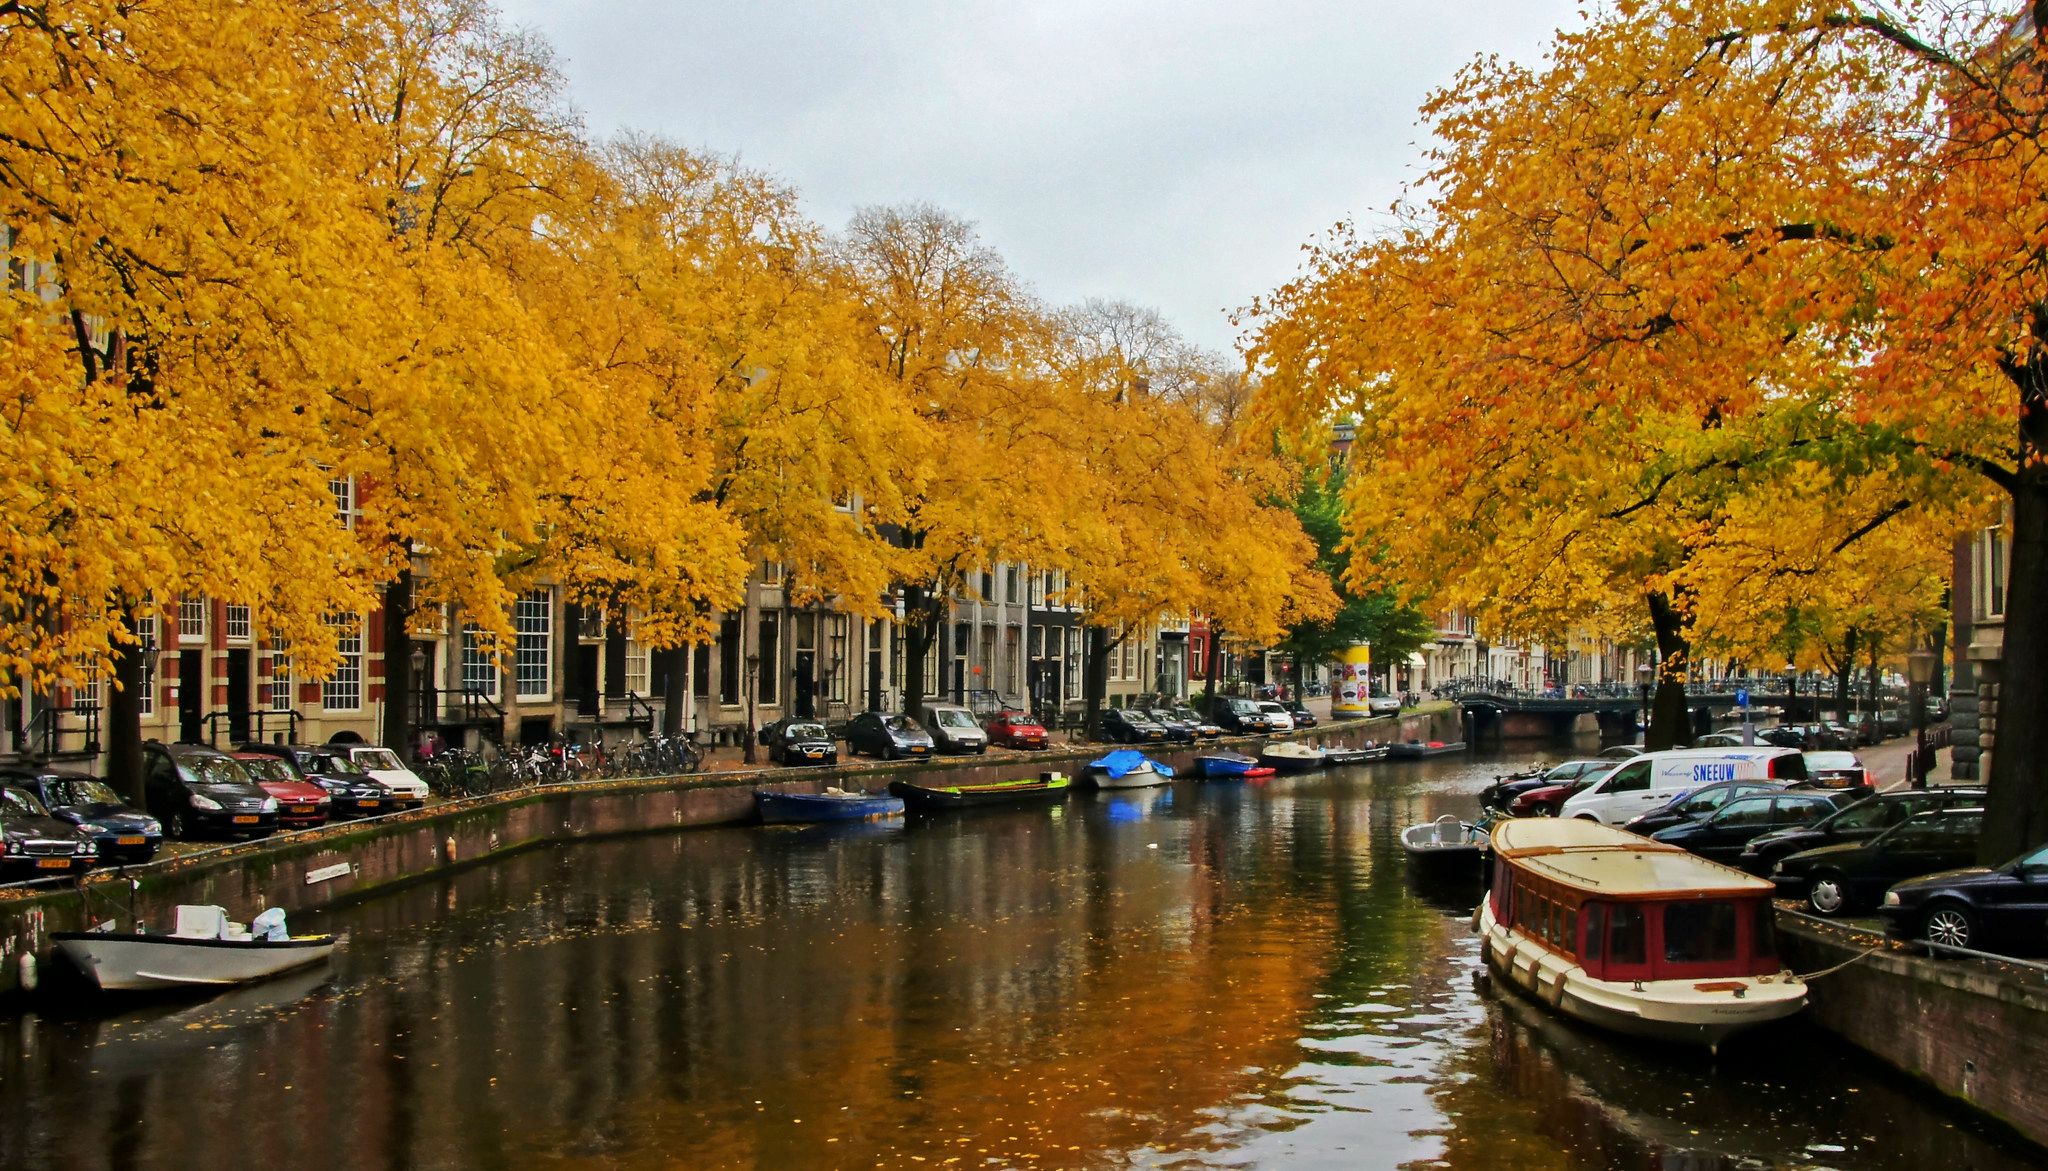 Autumn colors in Amsterdam